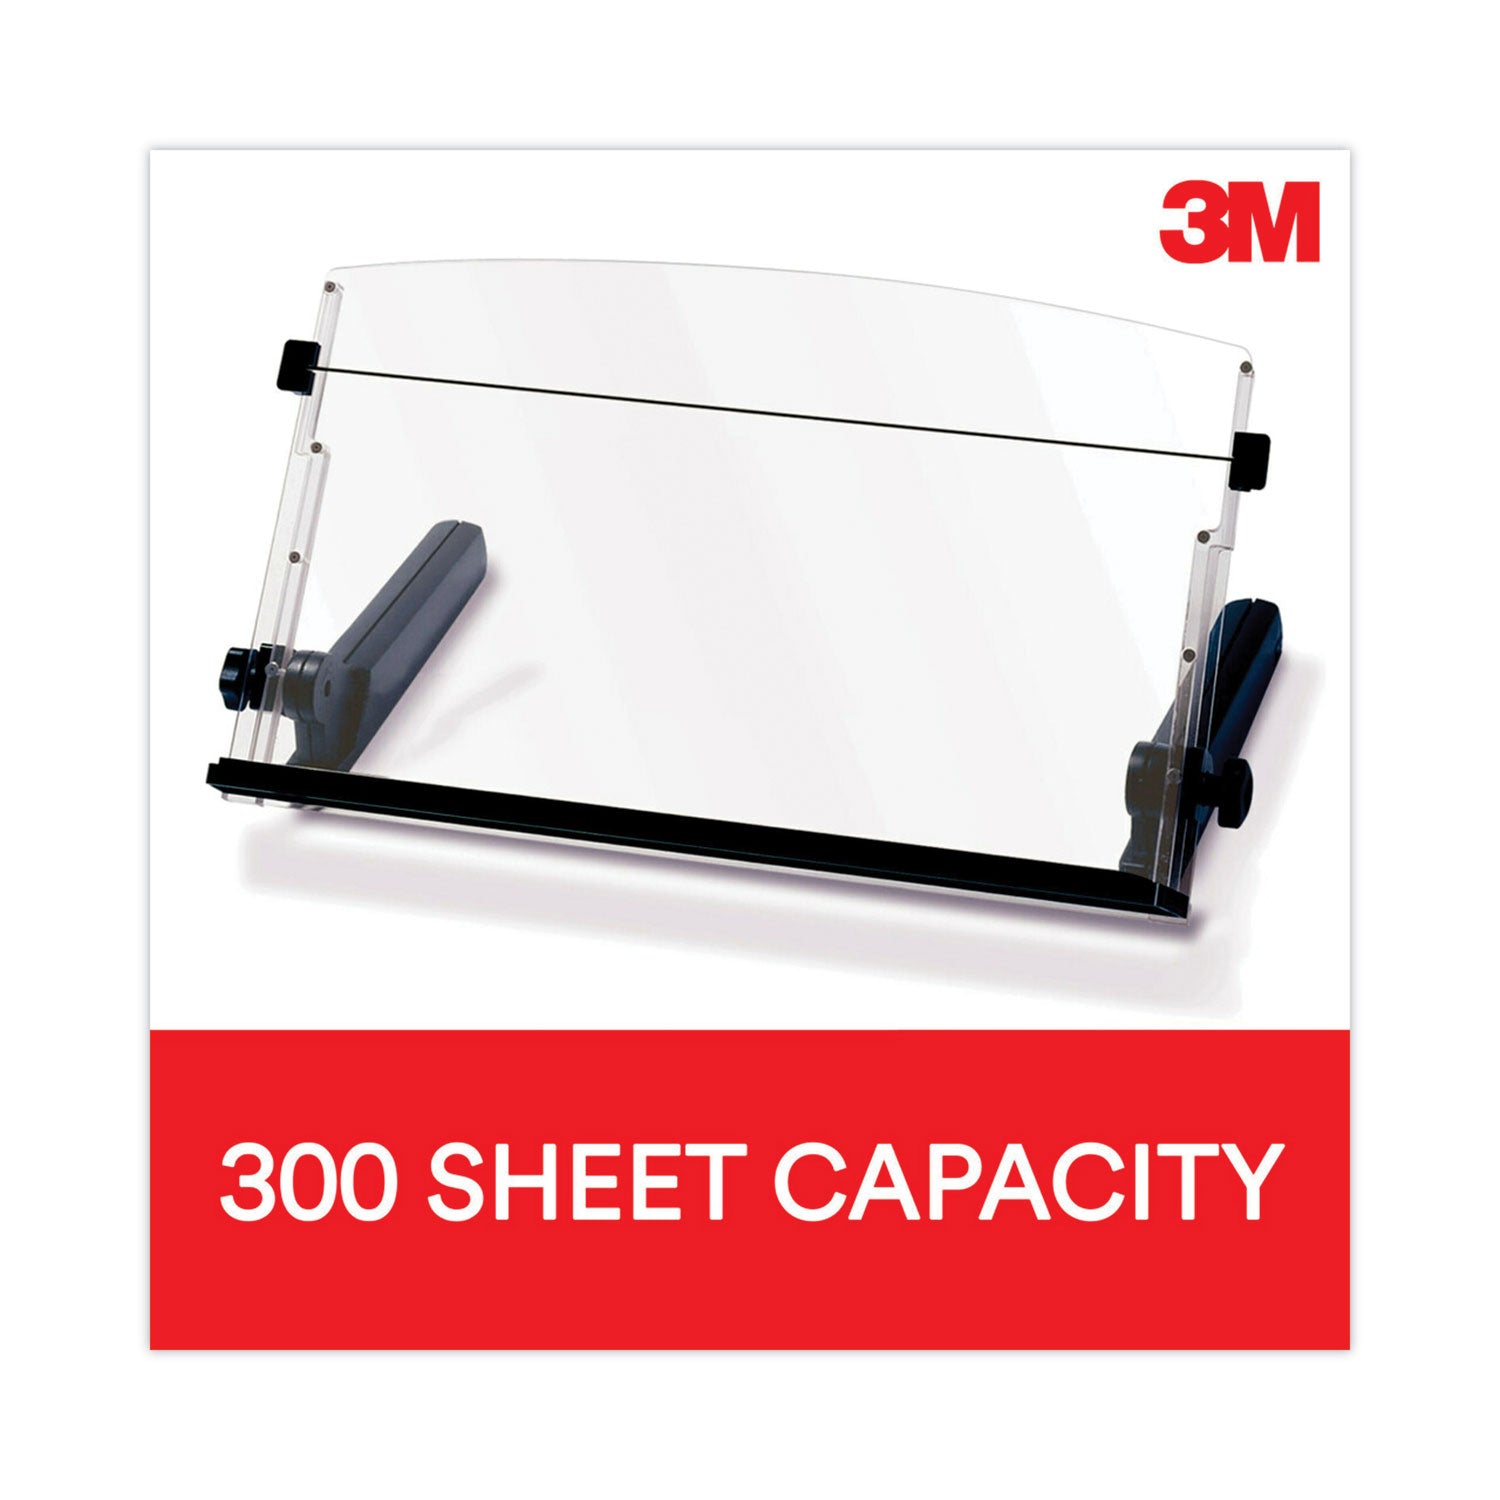 In-Line Freestanding Copyholder, 300 Sheet Capacity, Plastic, Black/Clear - 